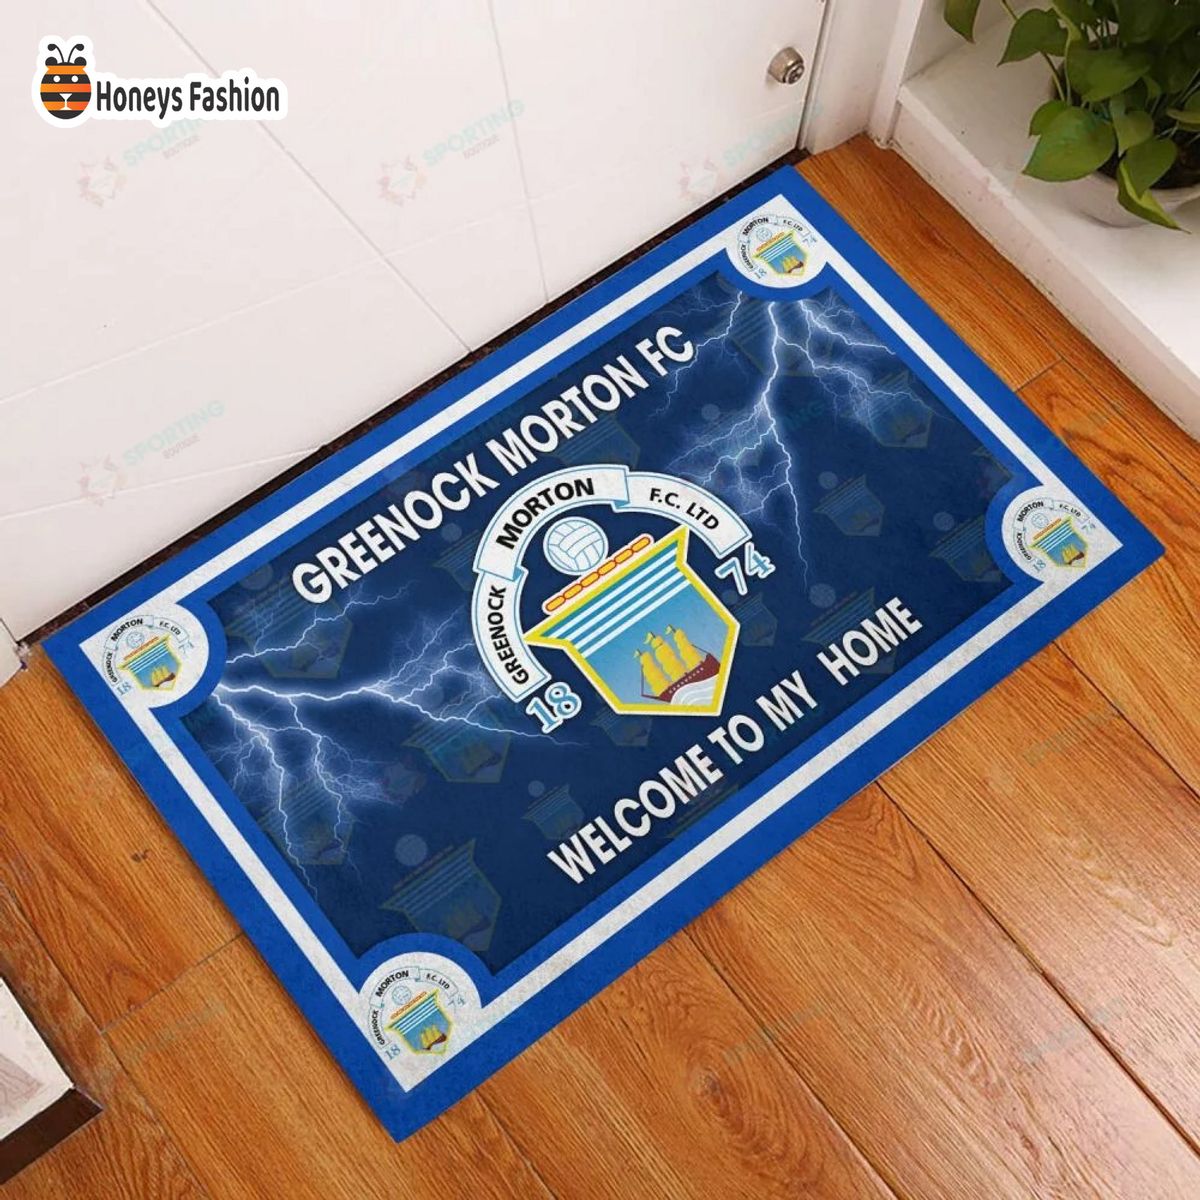 Greenock Morton F.C. welcome to my home doormat